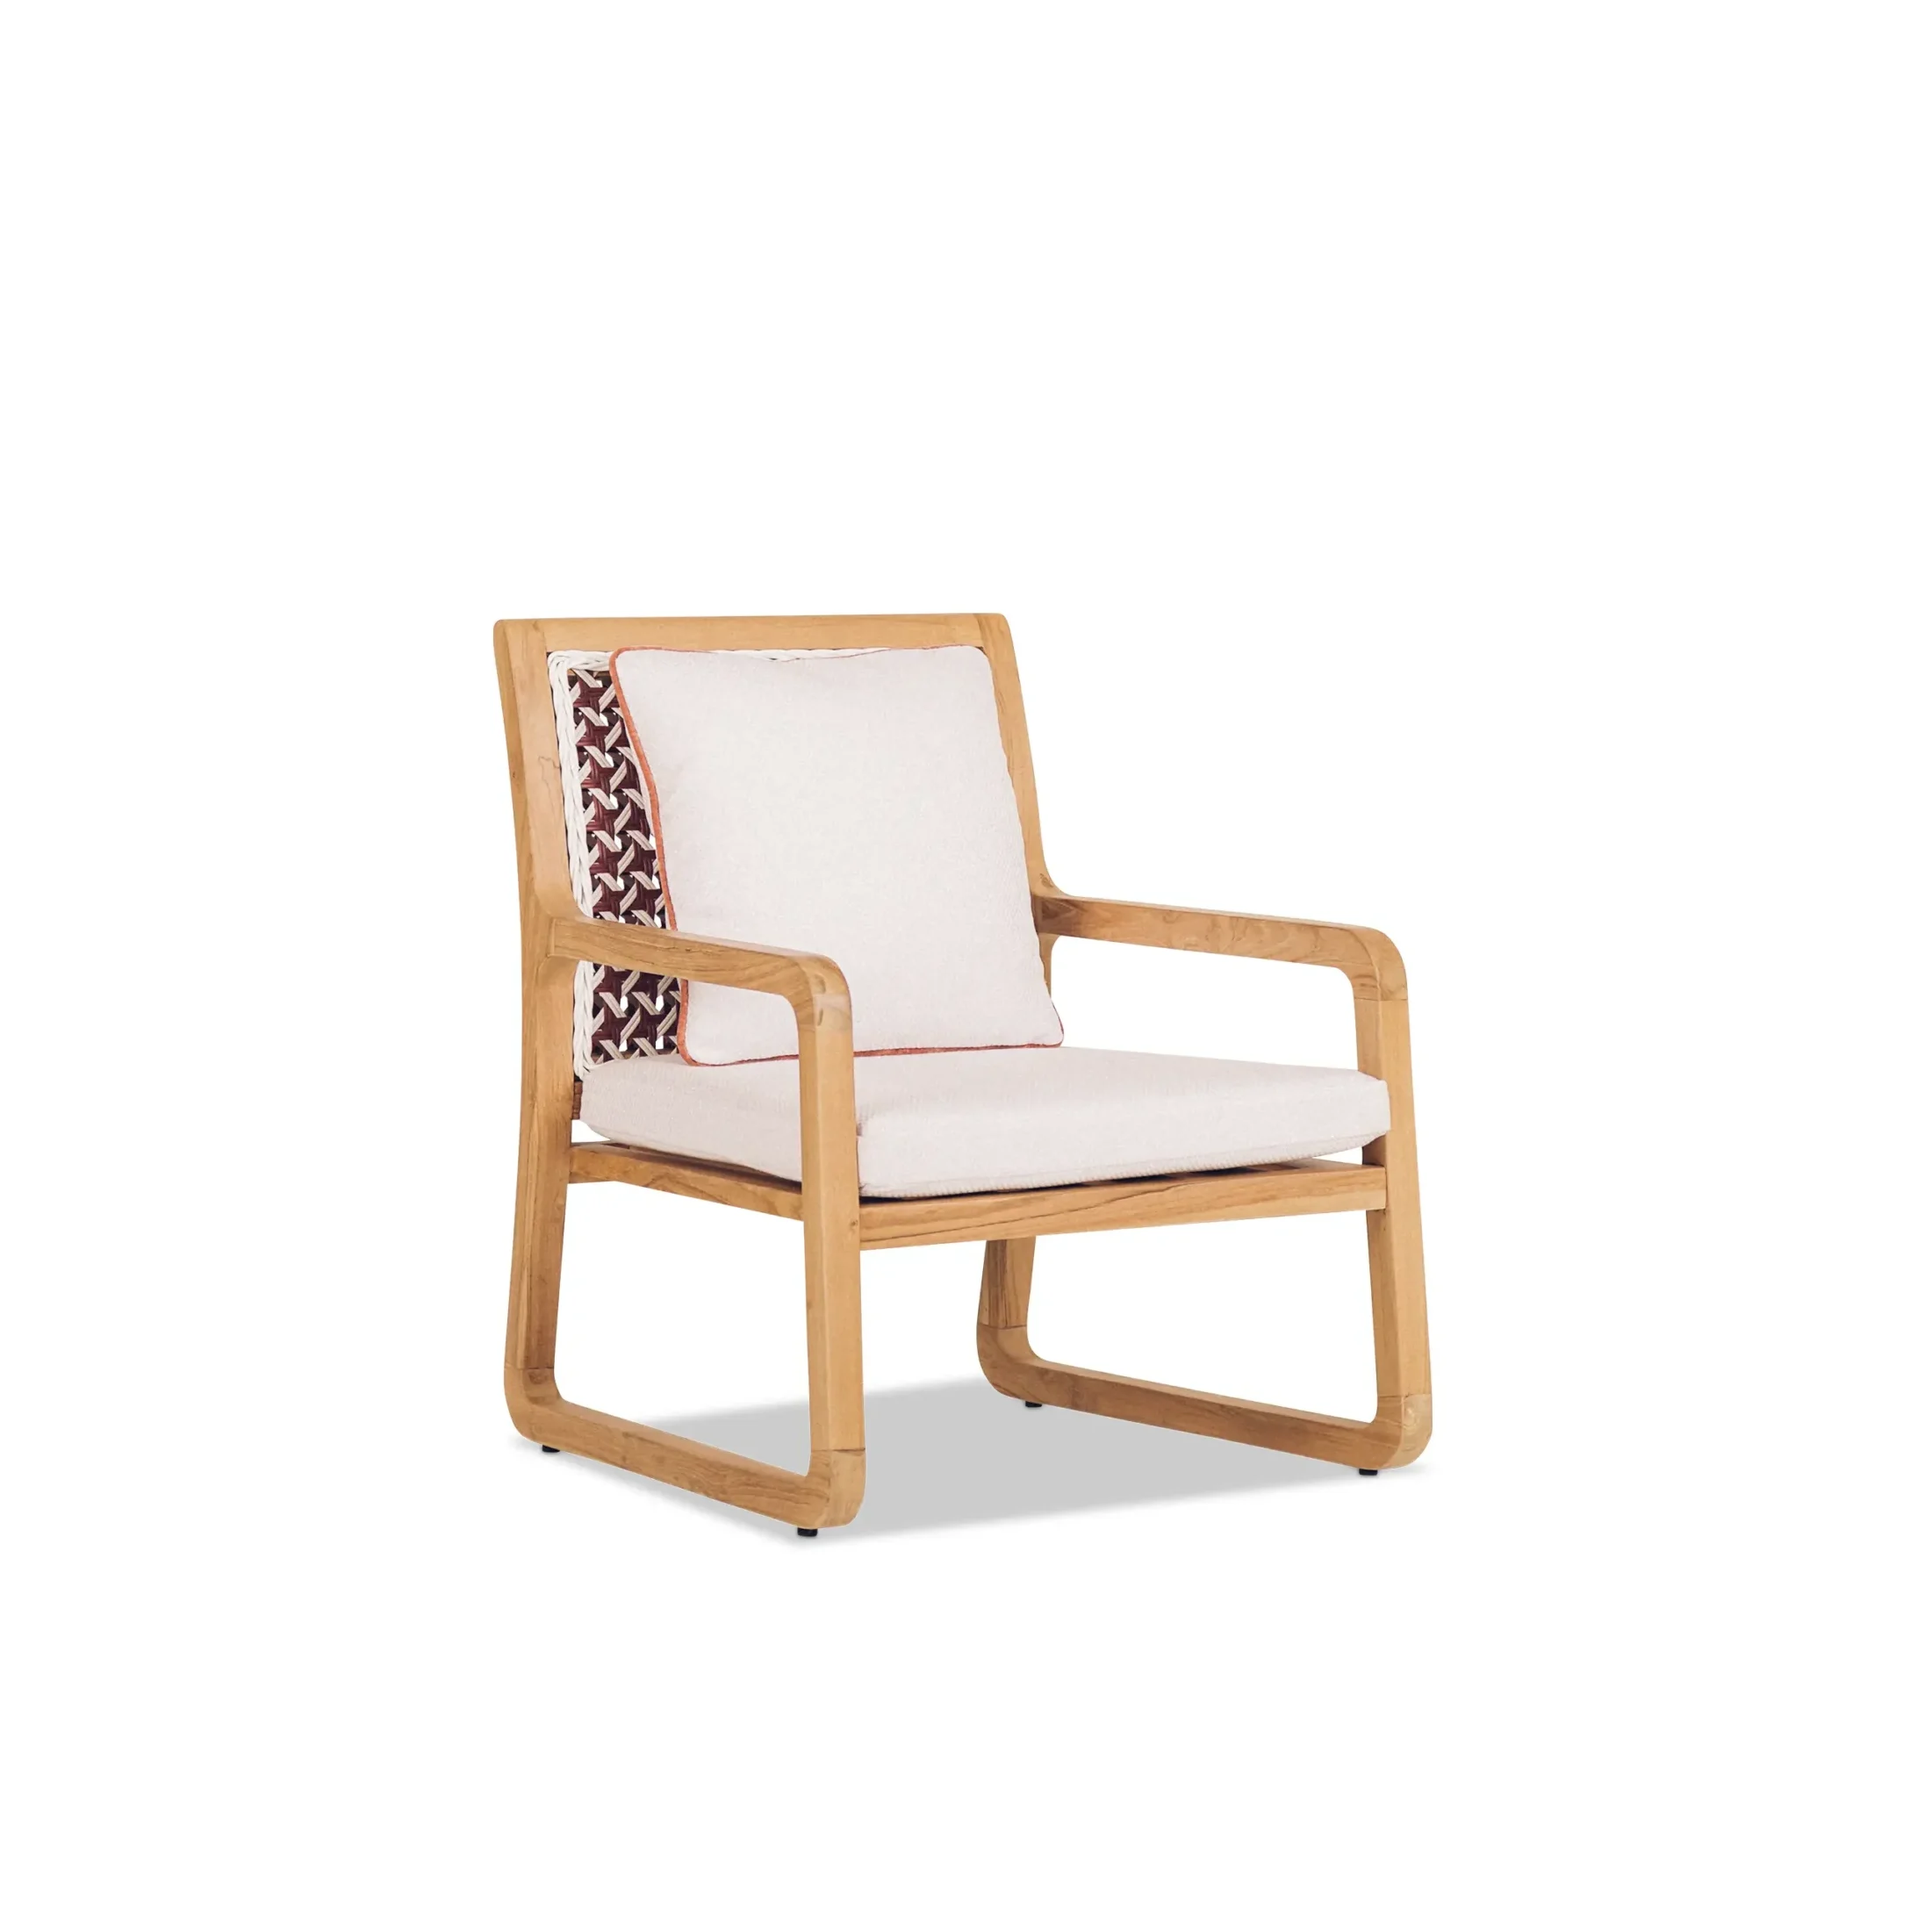 Lounge_chair-Curacao-side3_w